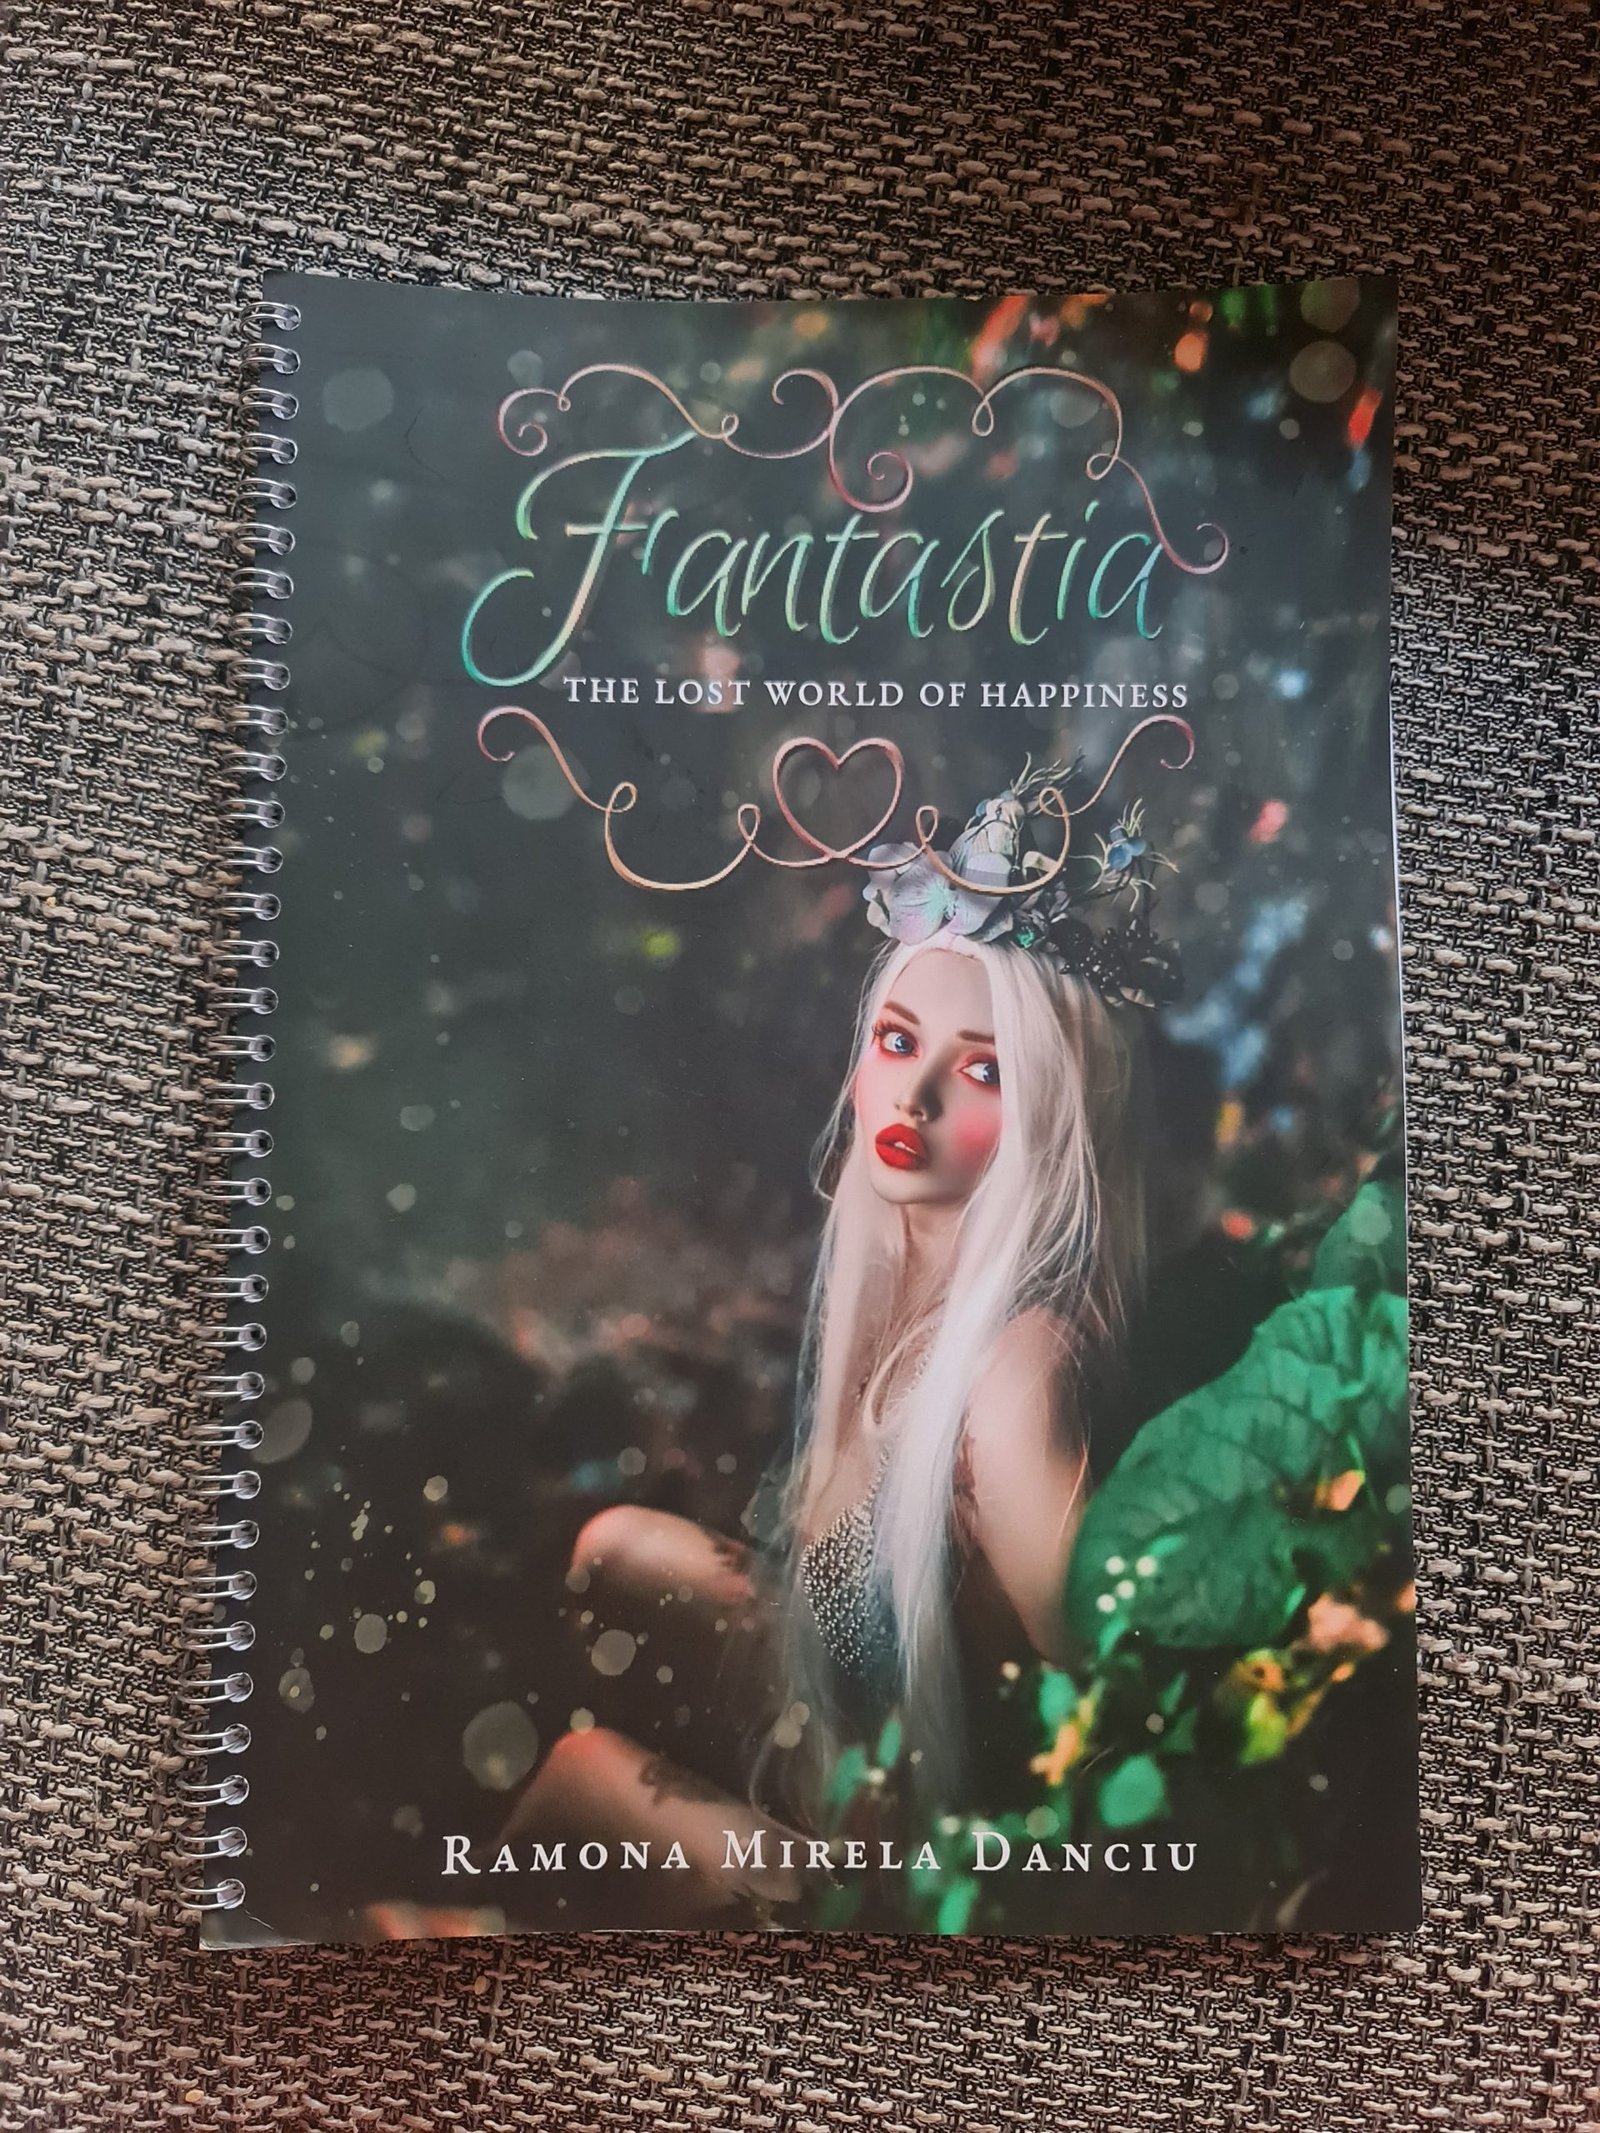 Book Recommendation: “3 / Fantastia: The Lost World of Happines” by Ramona Mirela Danciu